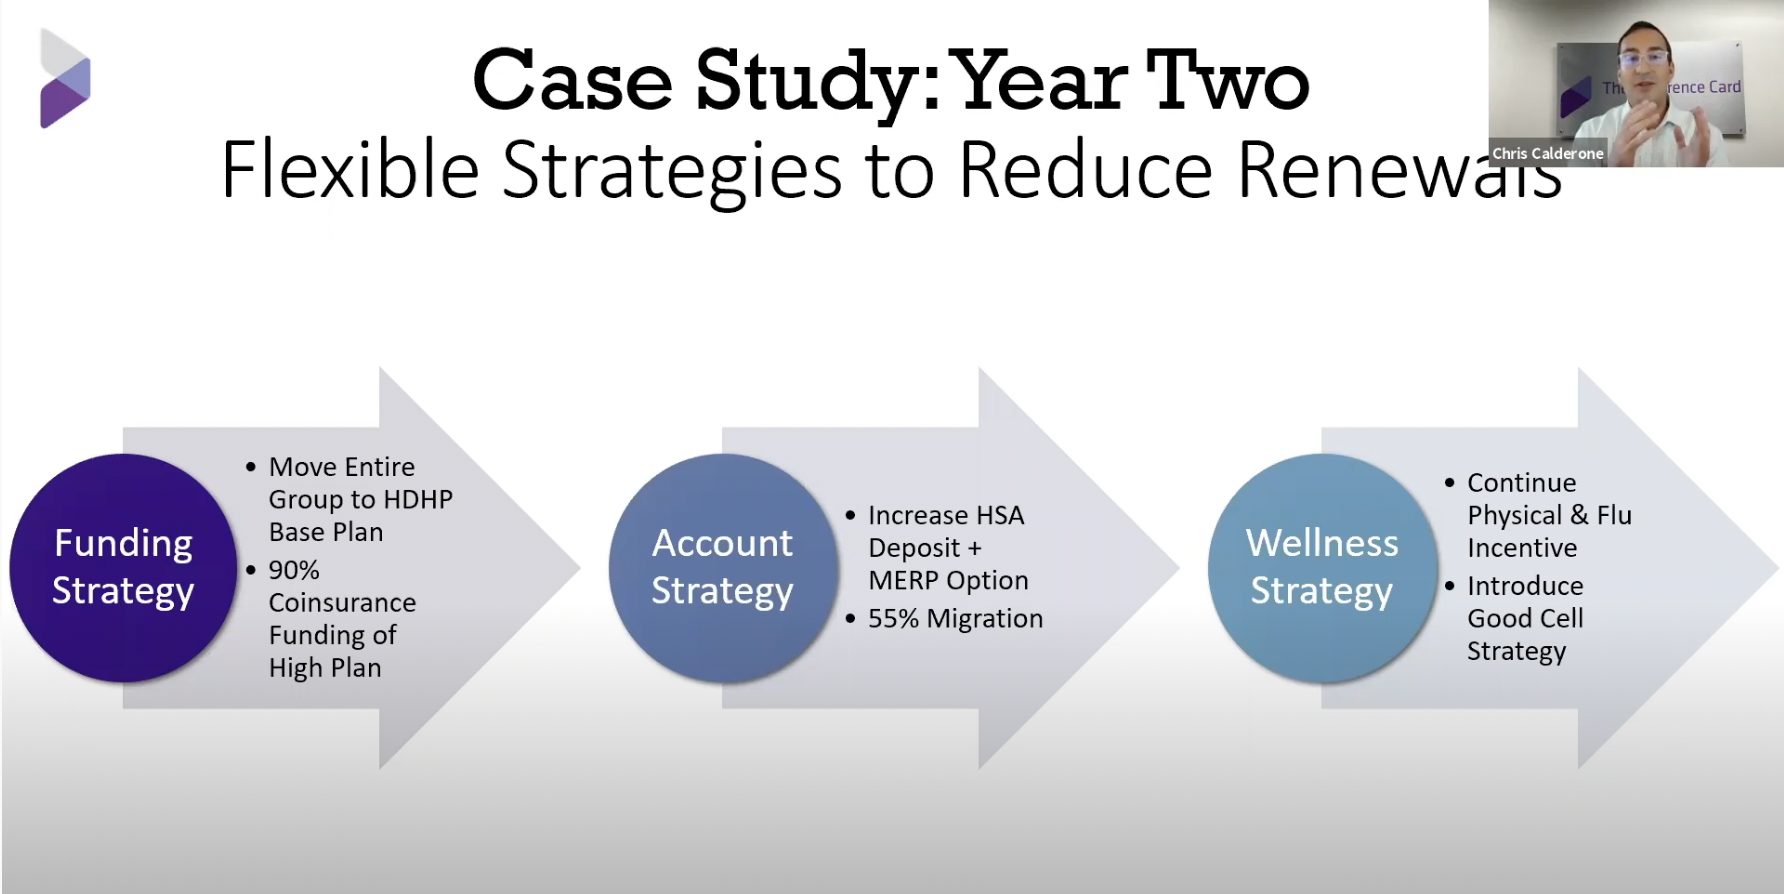 Webinar screenshot showing strategies for reducing health renewals